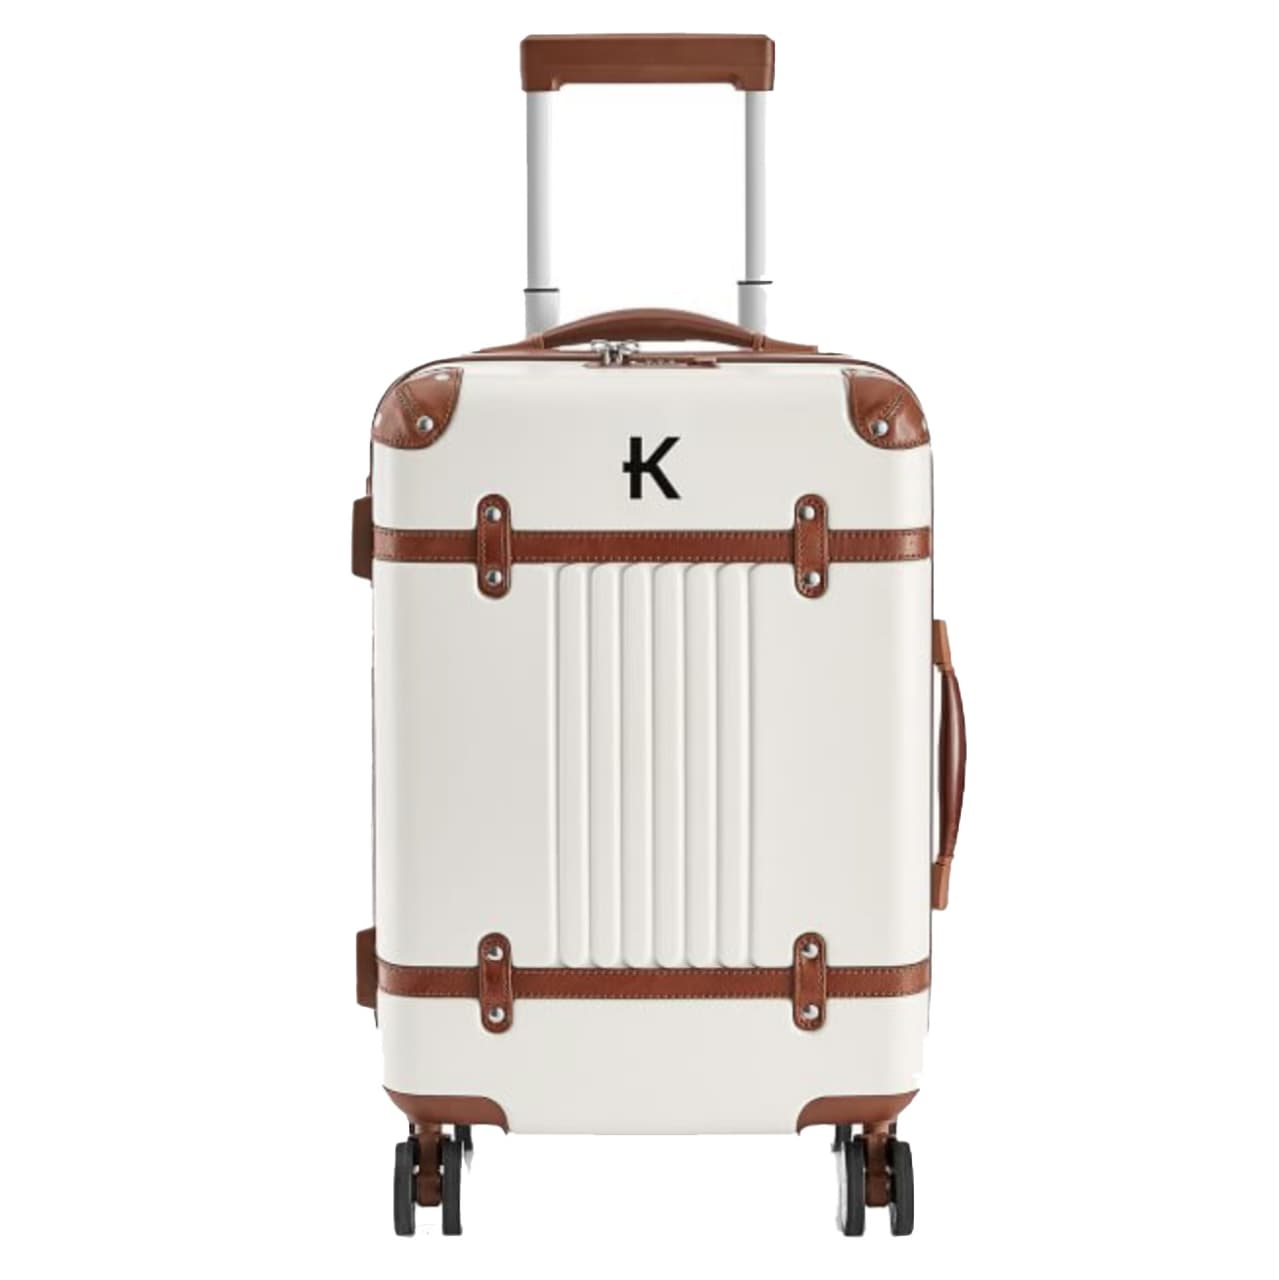 Monogrammed Travel Luggage